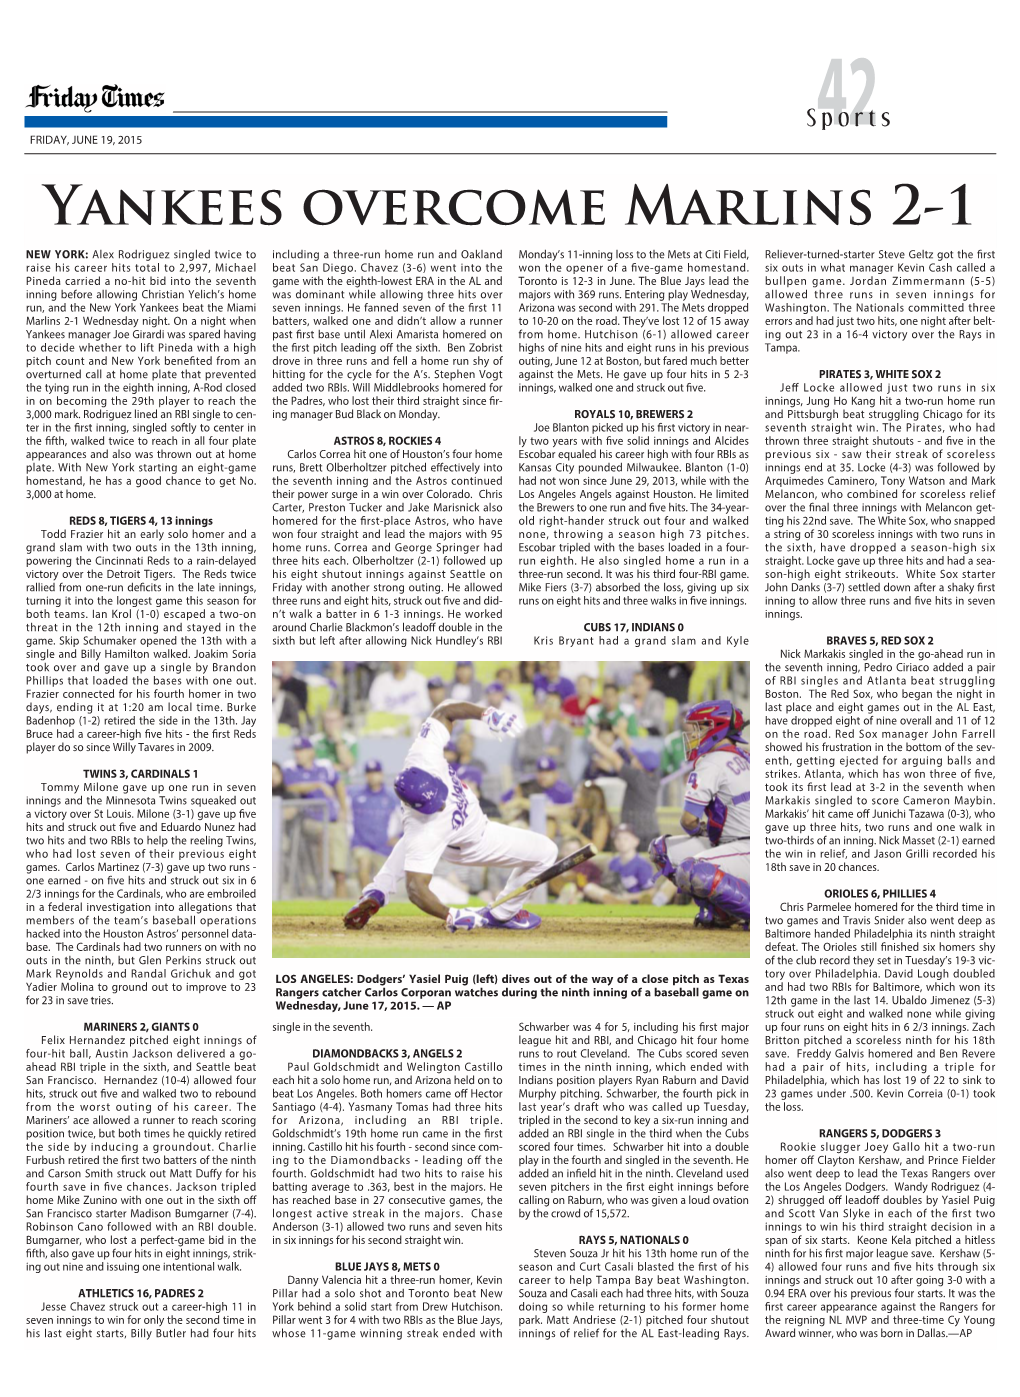 Yankees Overcome Marlins 2-1